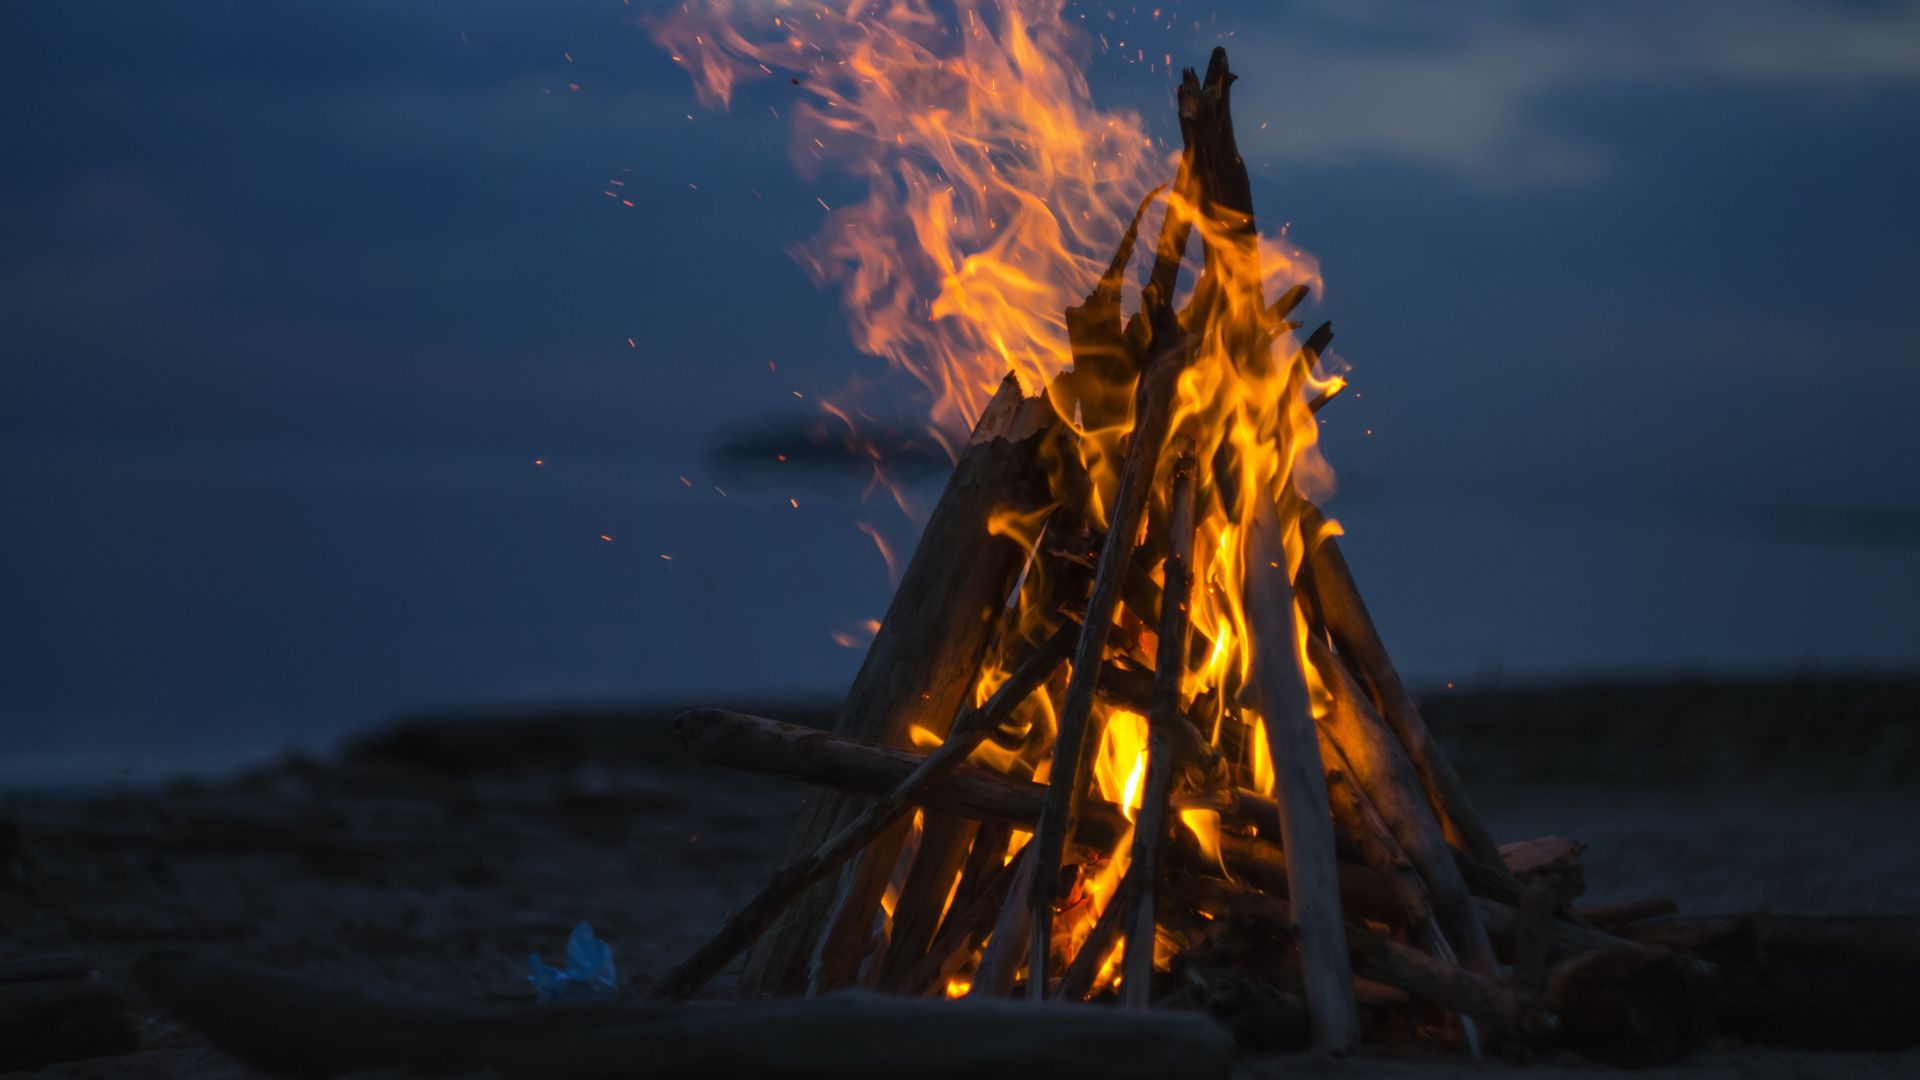 vatra krijes bonfire pixabay